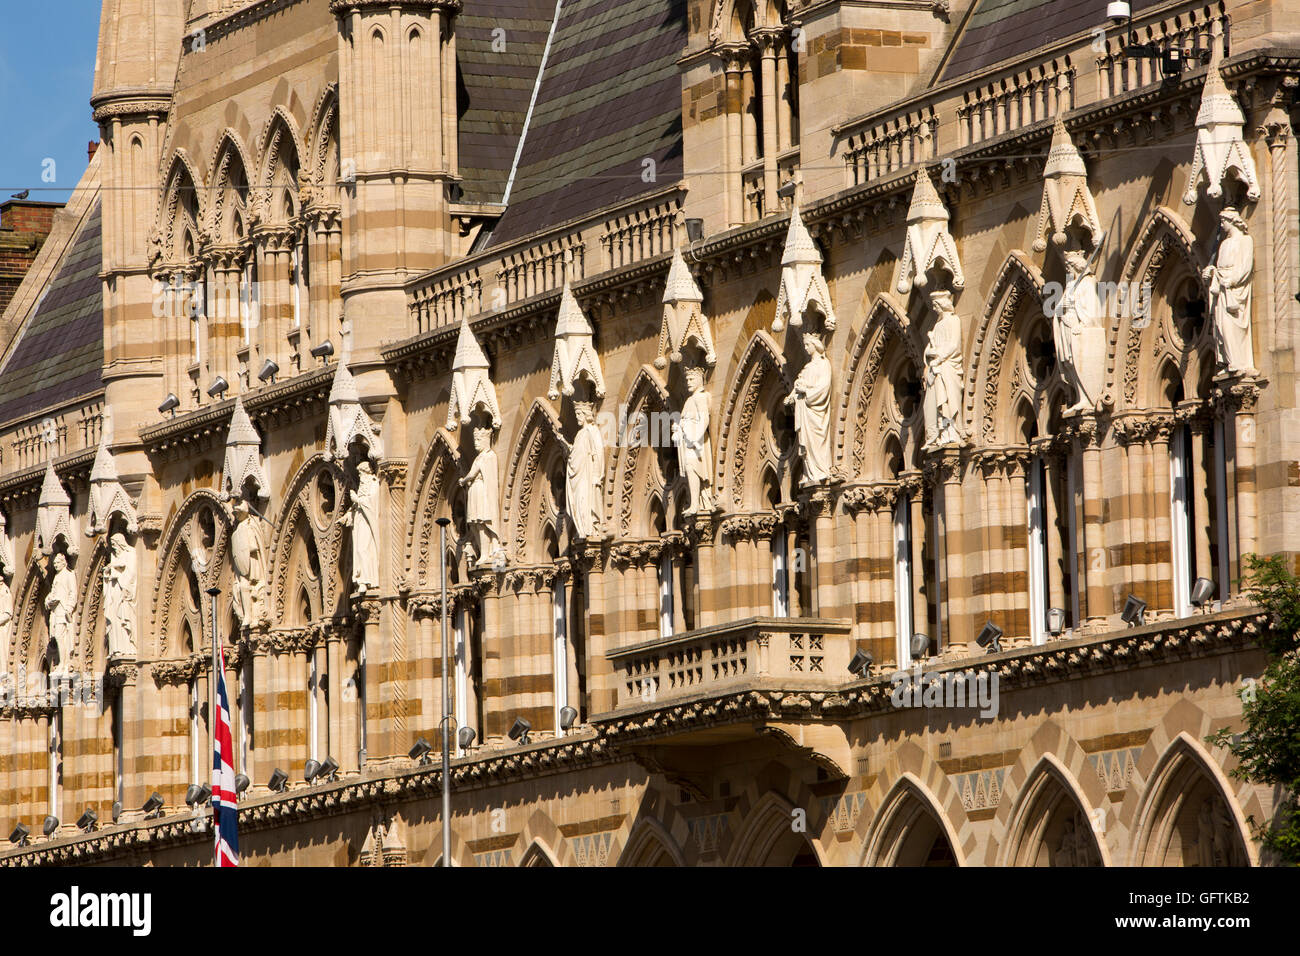 UK, England, Northamptonshire, Northampton, St Giles’ Square, 1864 Guildhall statues of monarchs Stock Photo